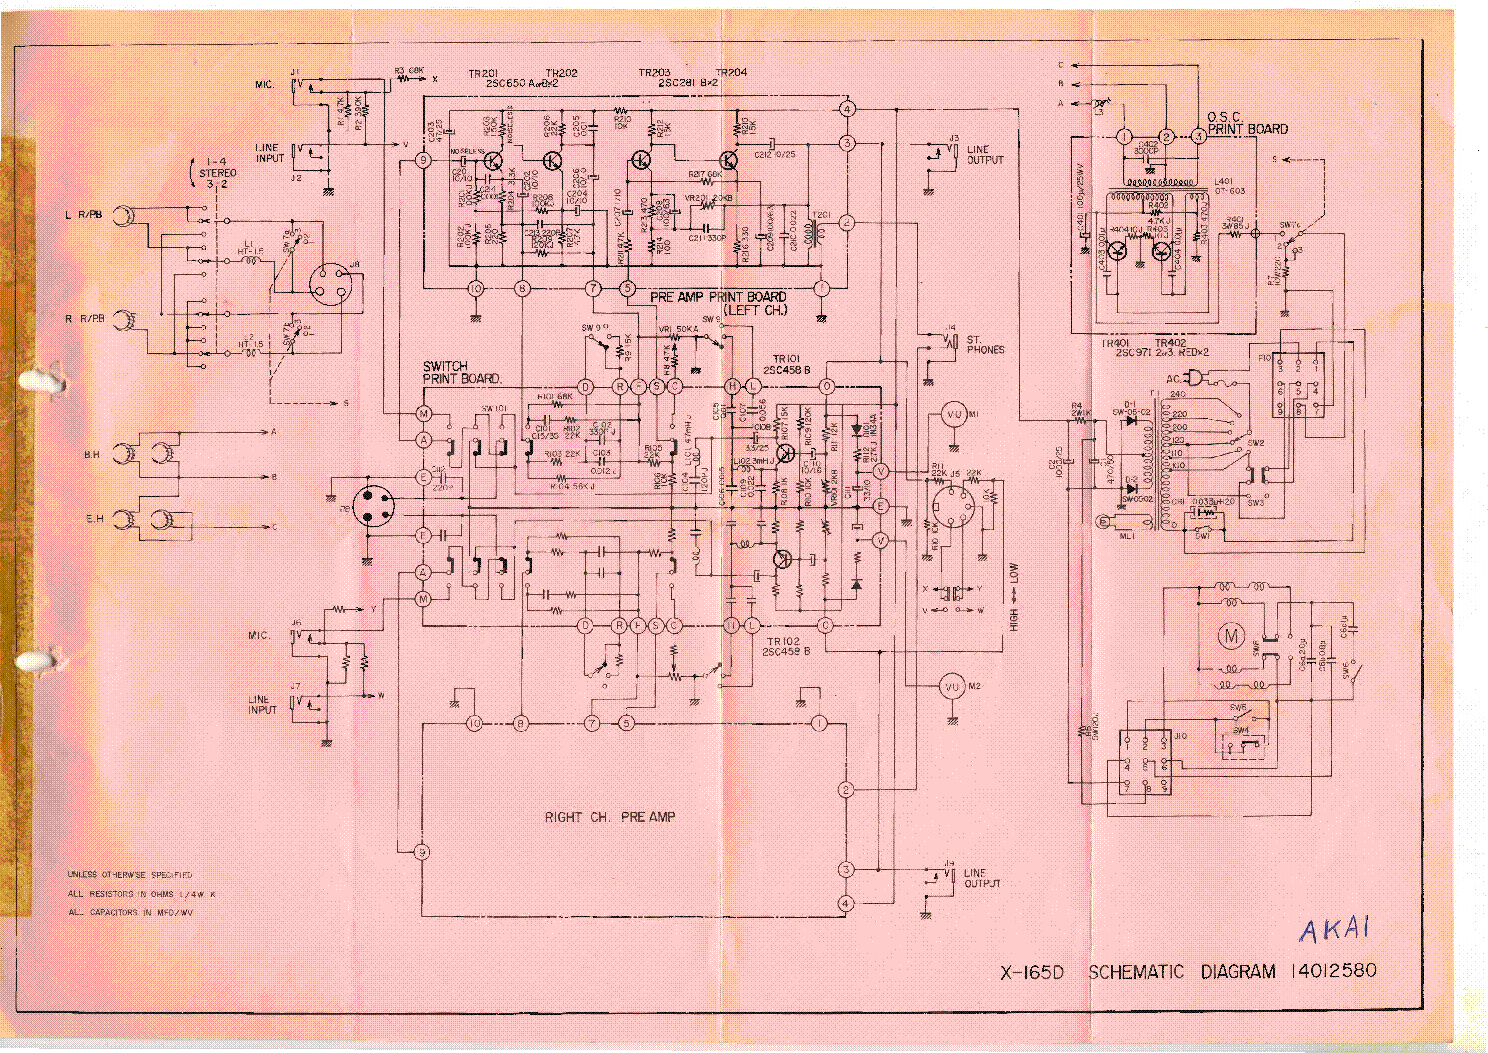 AKAI X-165D MAGNETOPHON SCH service manual (1st page)